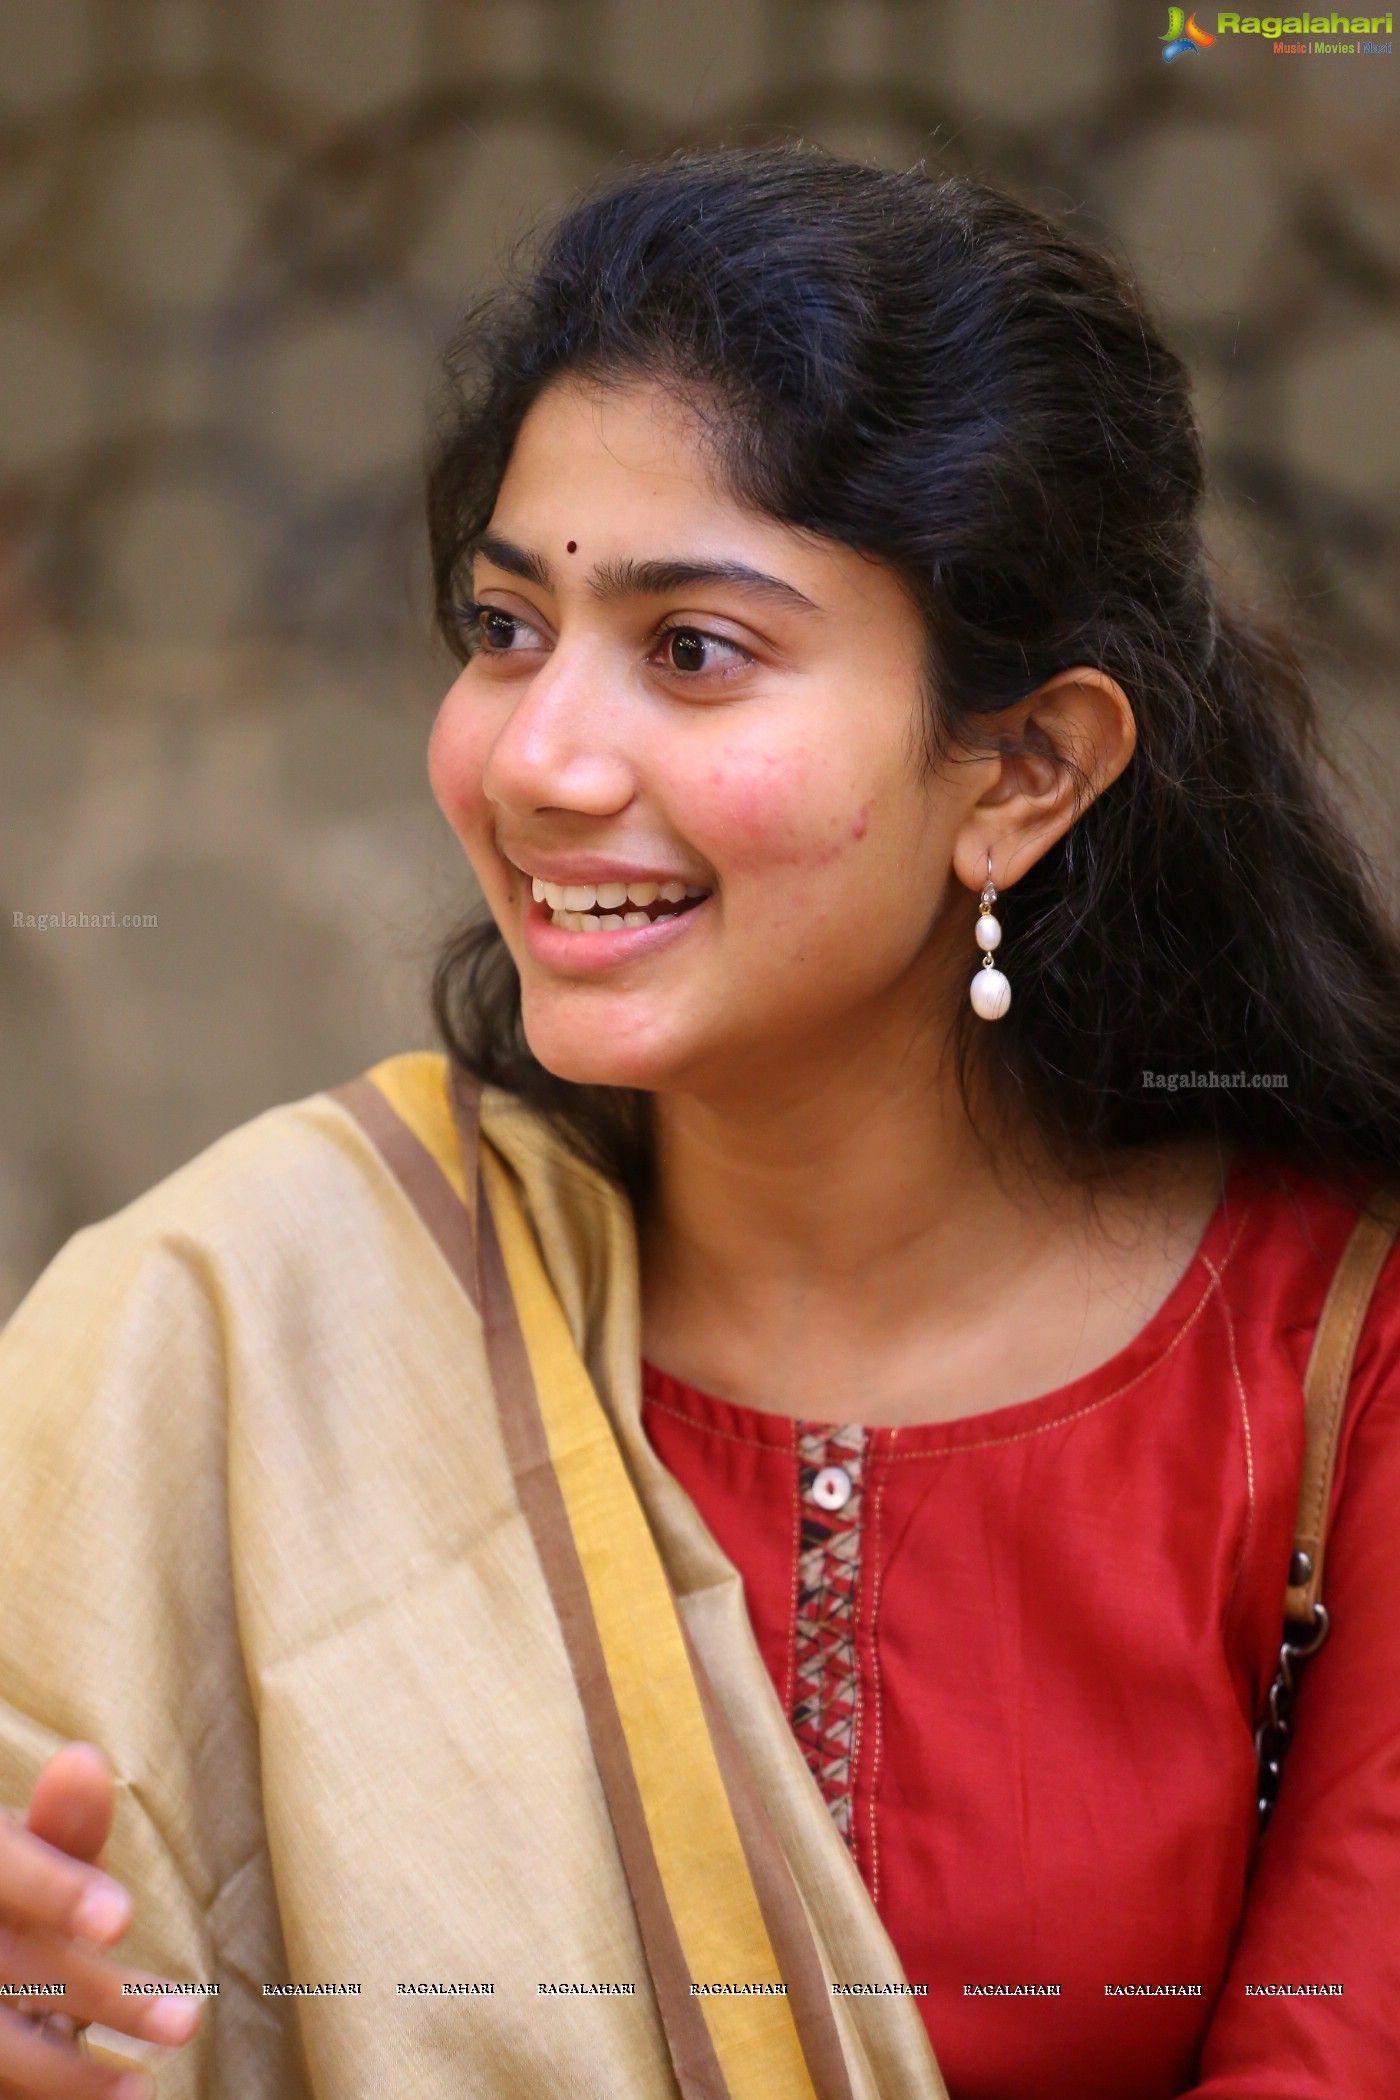 Sai Pallavi (Posters) Image 14. Telugu Actress Image